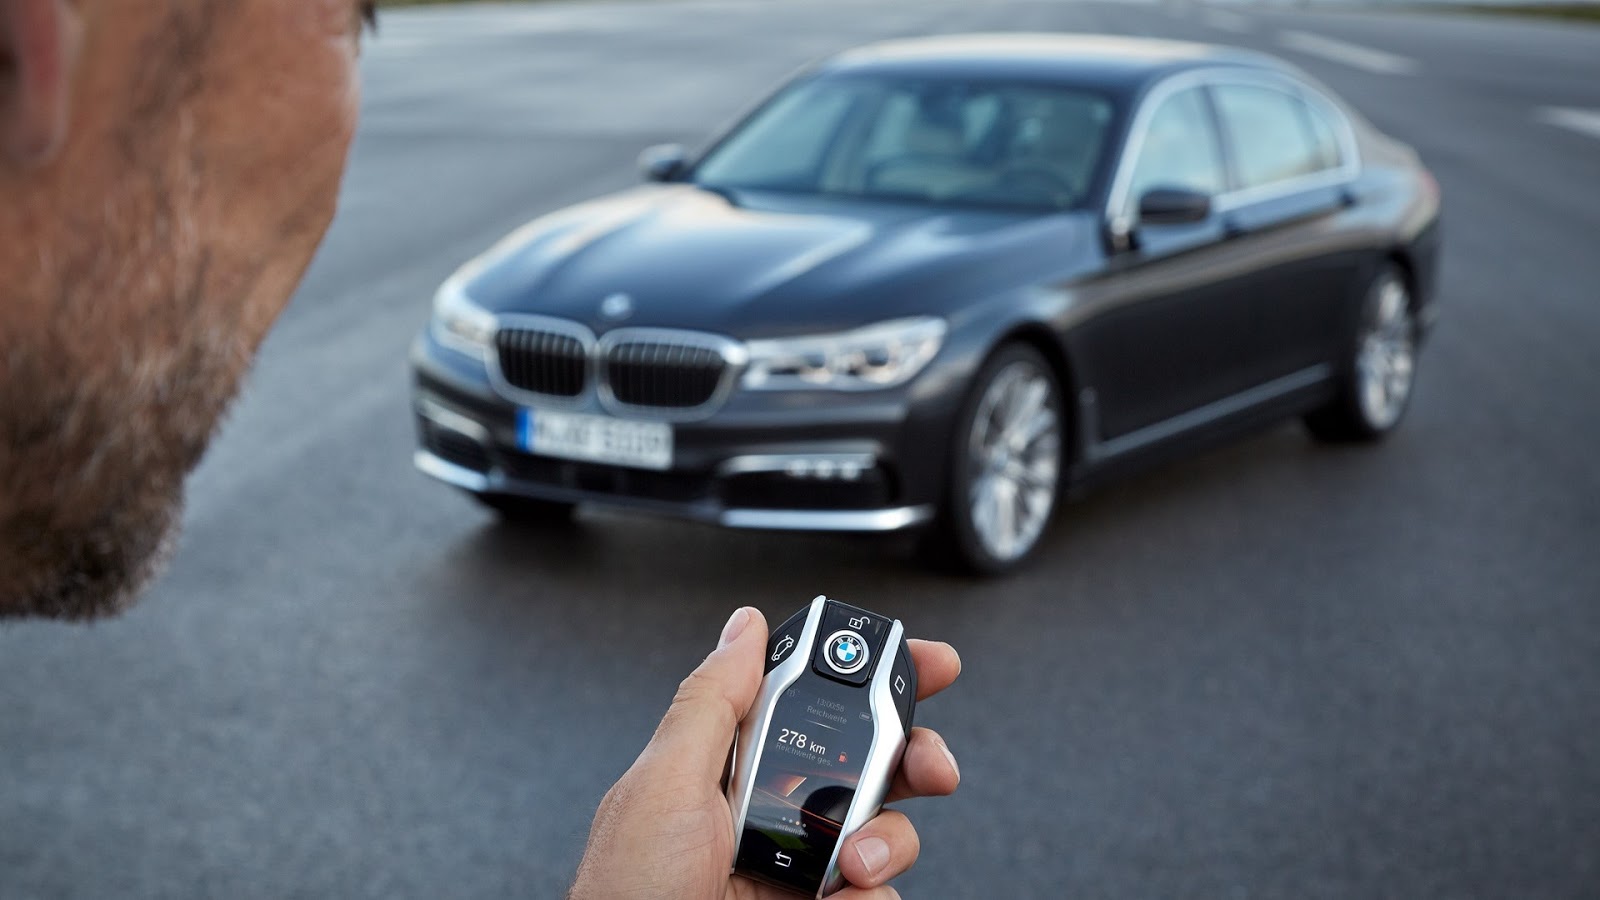 BMW 7serisi 2016 model anahtar tasarimi resimleri rooteto